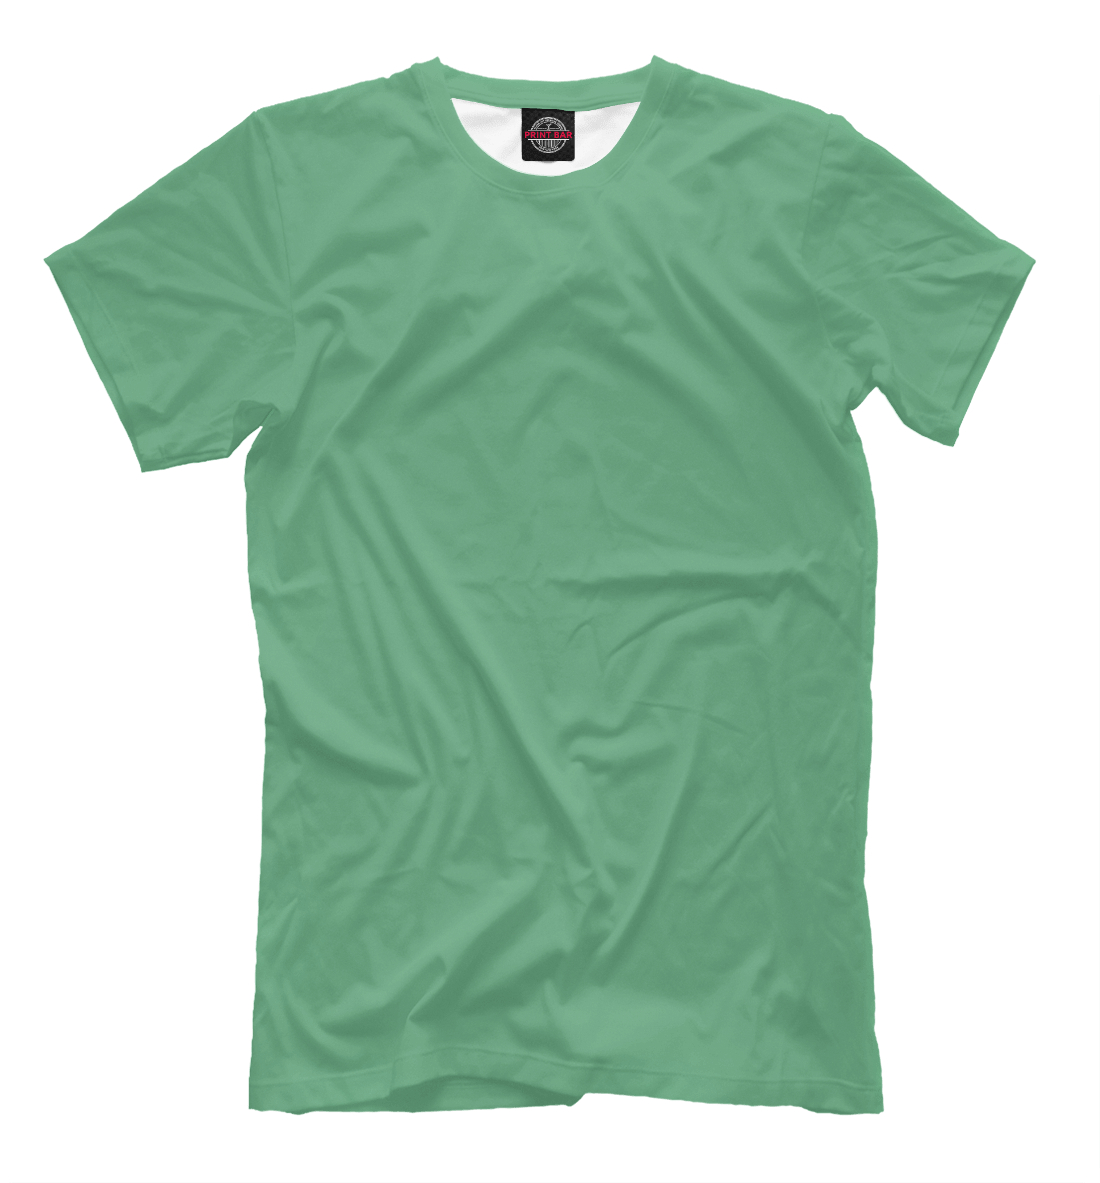 Футболка Цвет Морской зеленый для мужчин, артикул: CLR-317403-fut-2mp